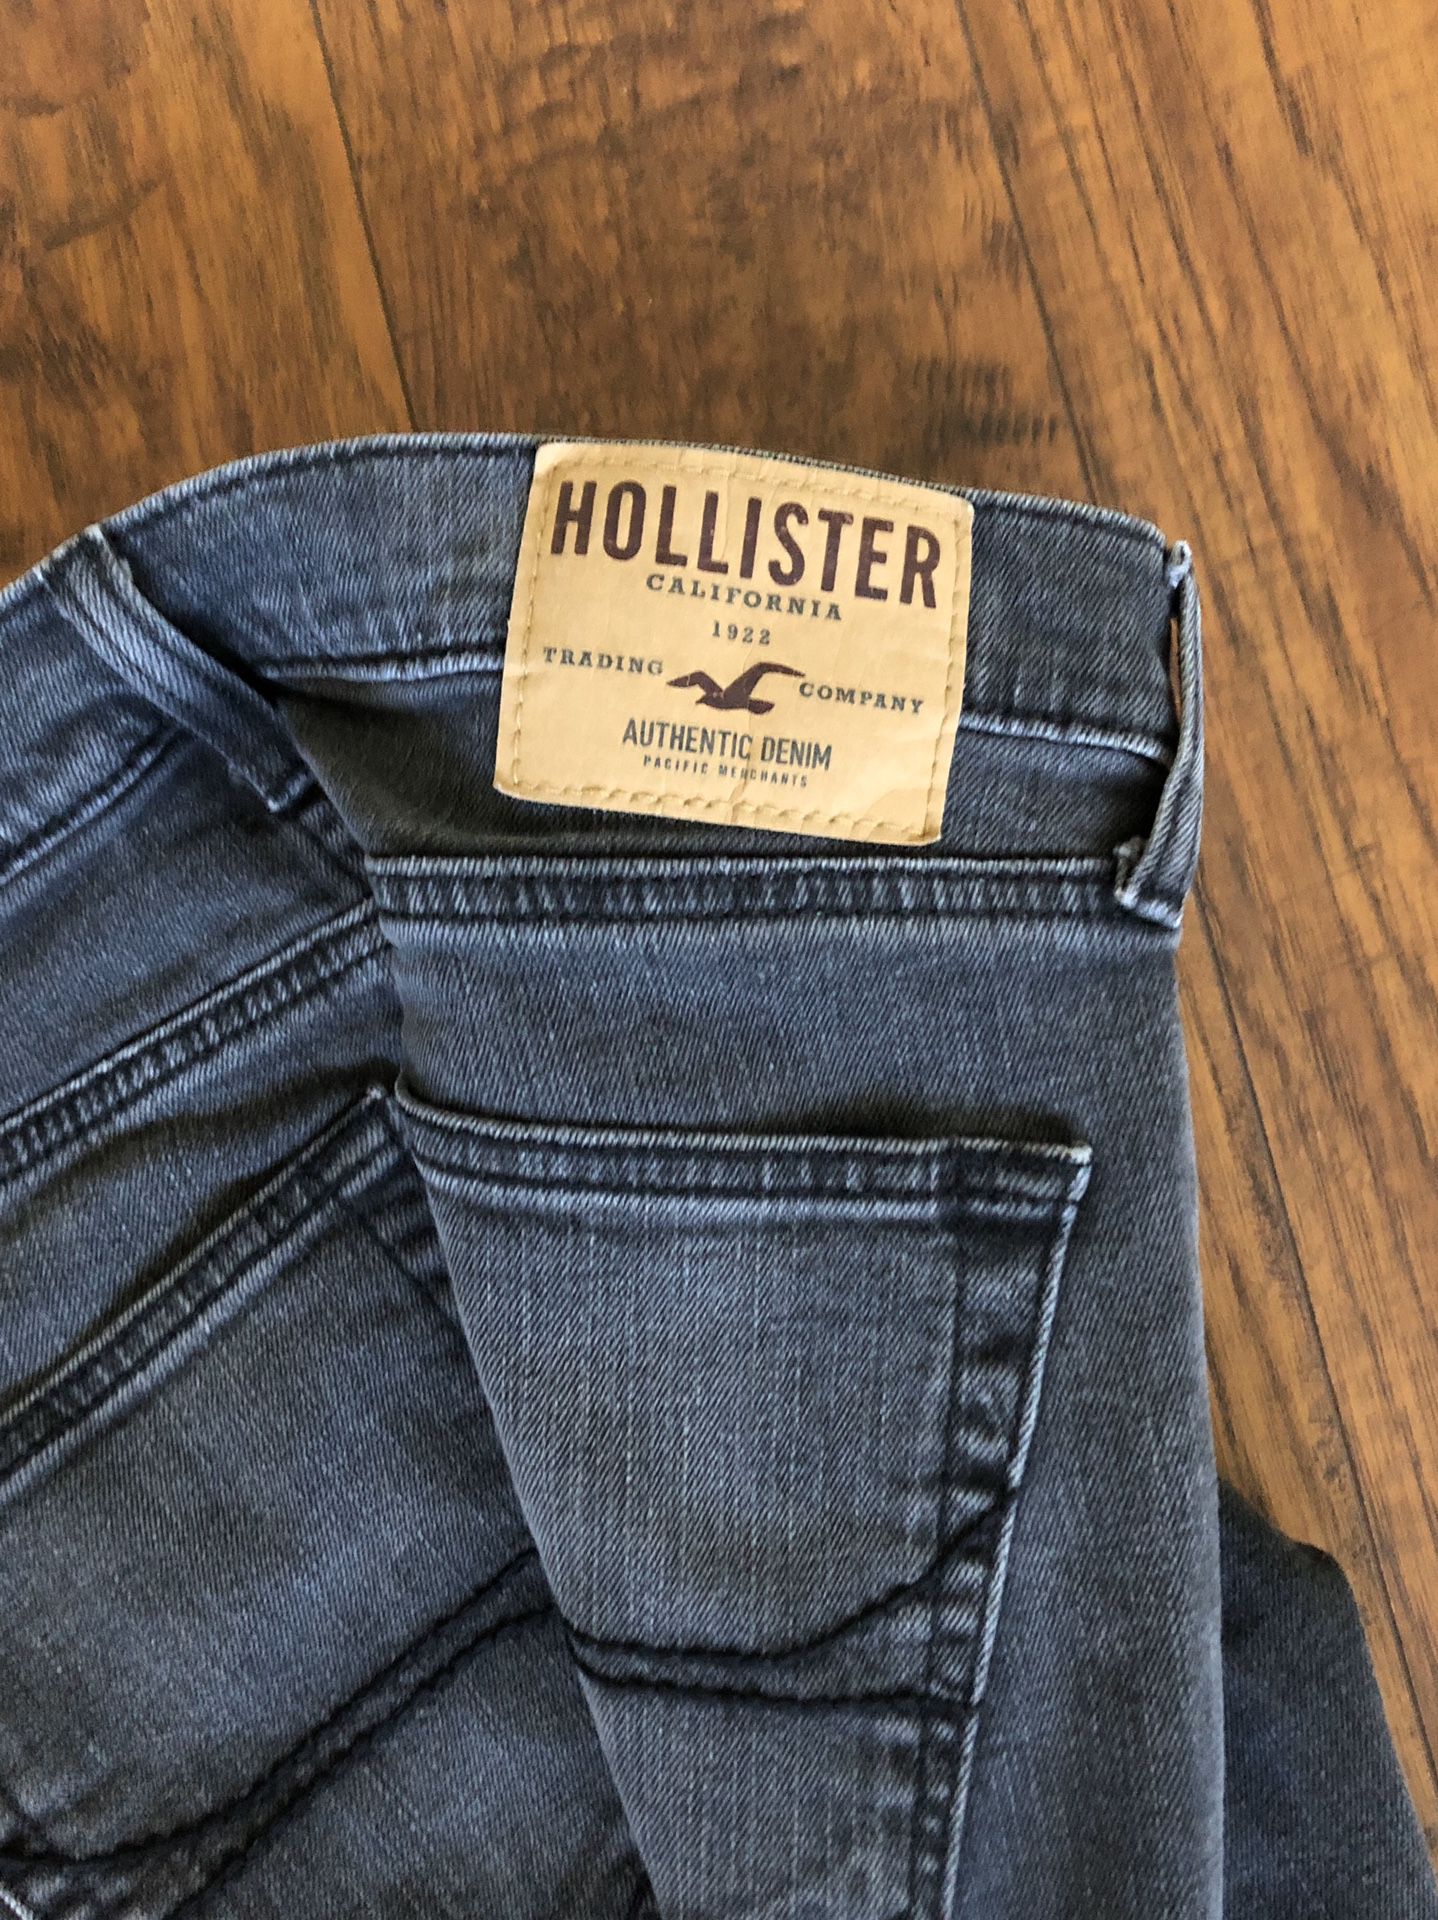 Hollister super skinny jeans size 28 x 30 like new